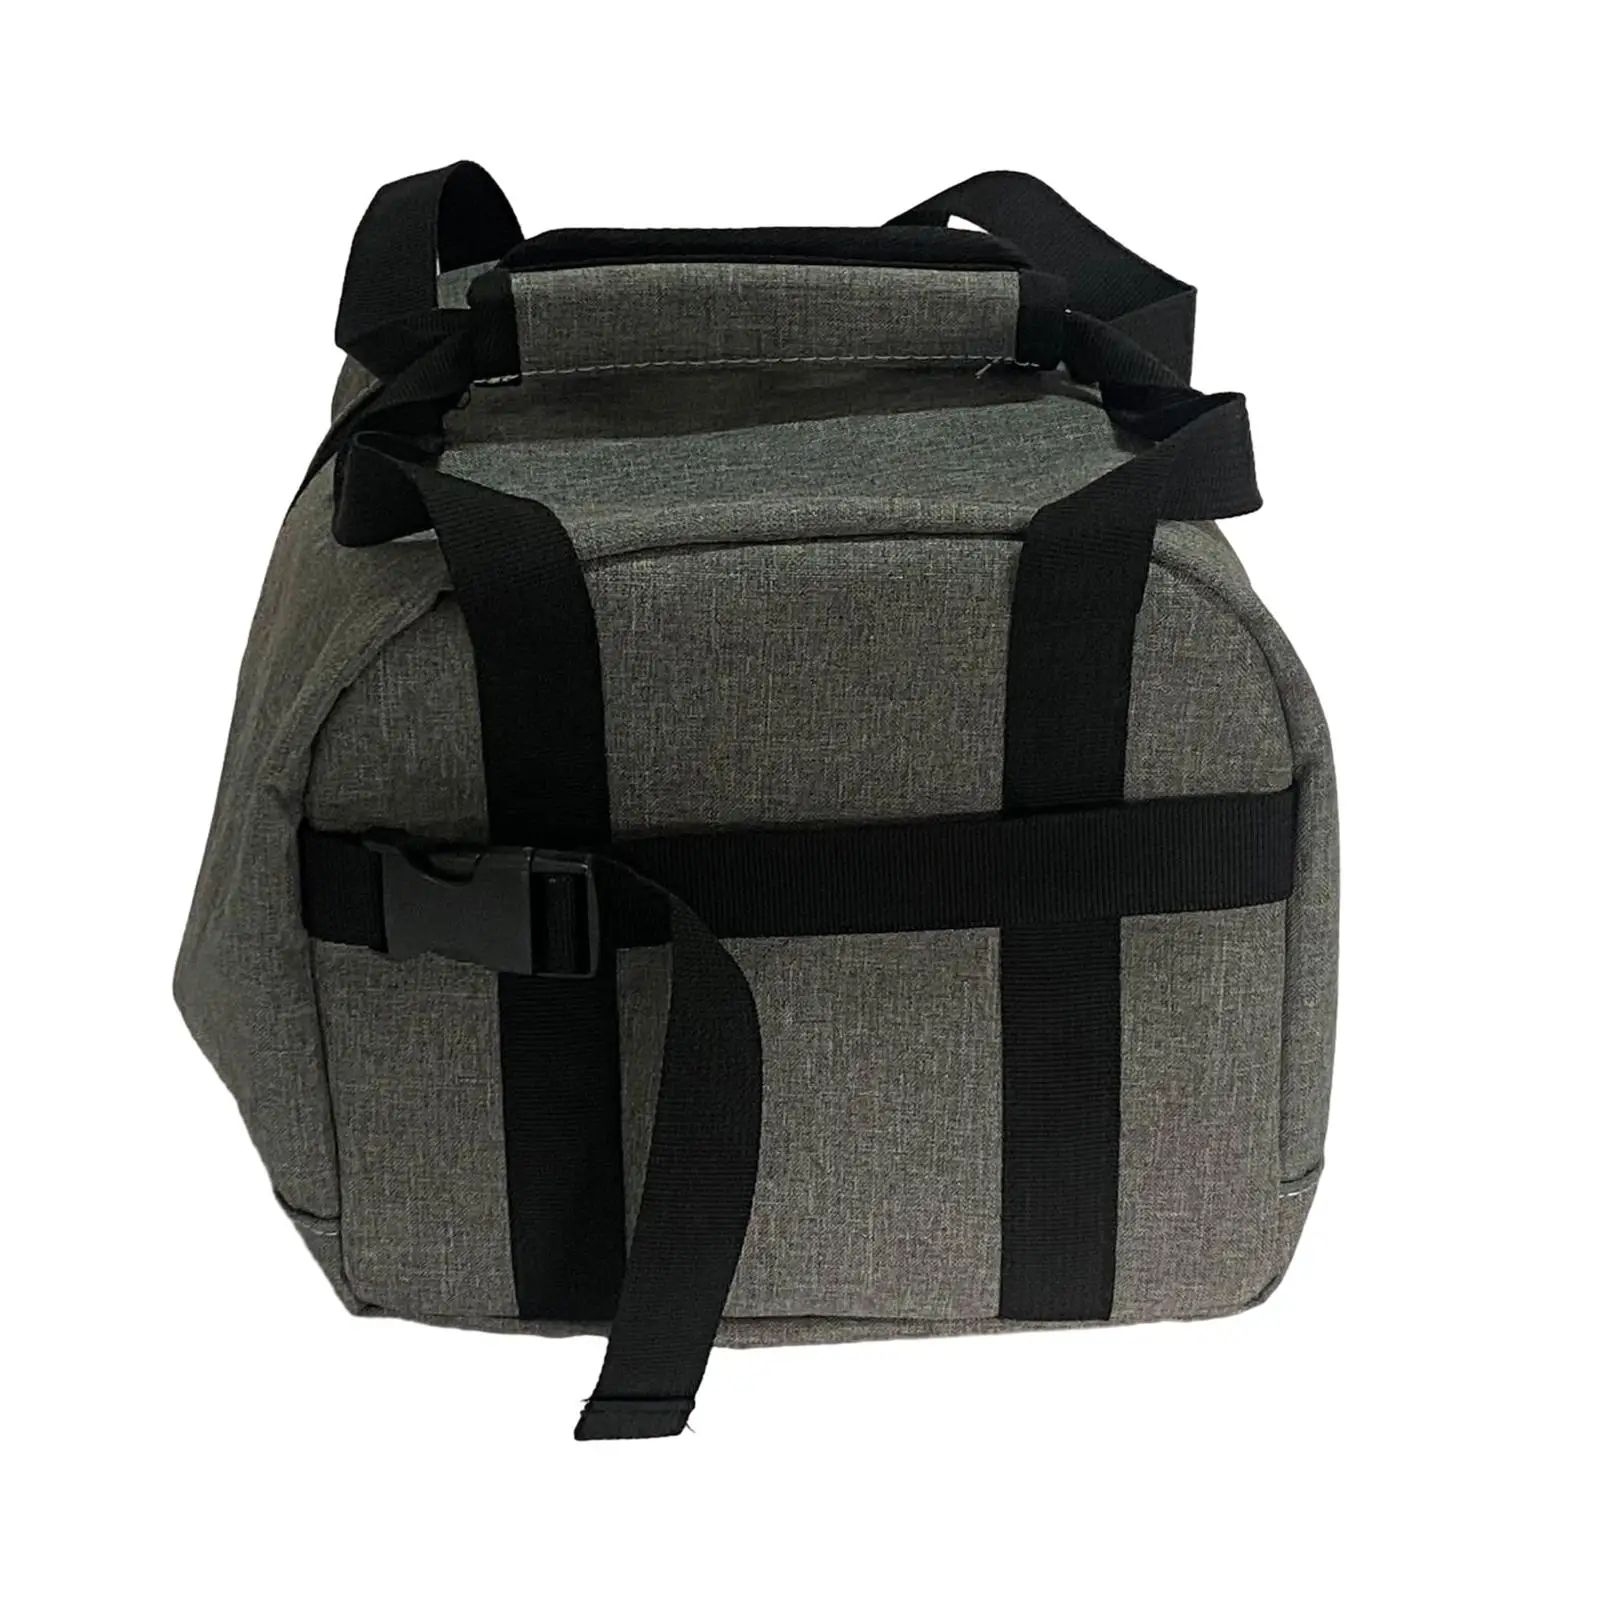 Single Bowling Ball Bag Durable Double Zipper Compact Easy to Carry with External Mesh Pocket Oxford Cloth Handbag for Women Men